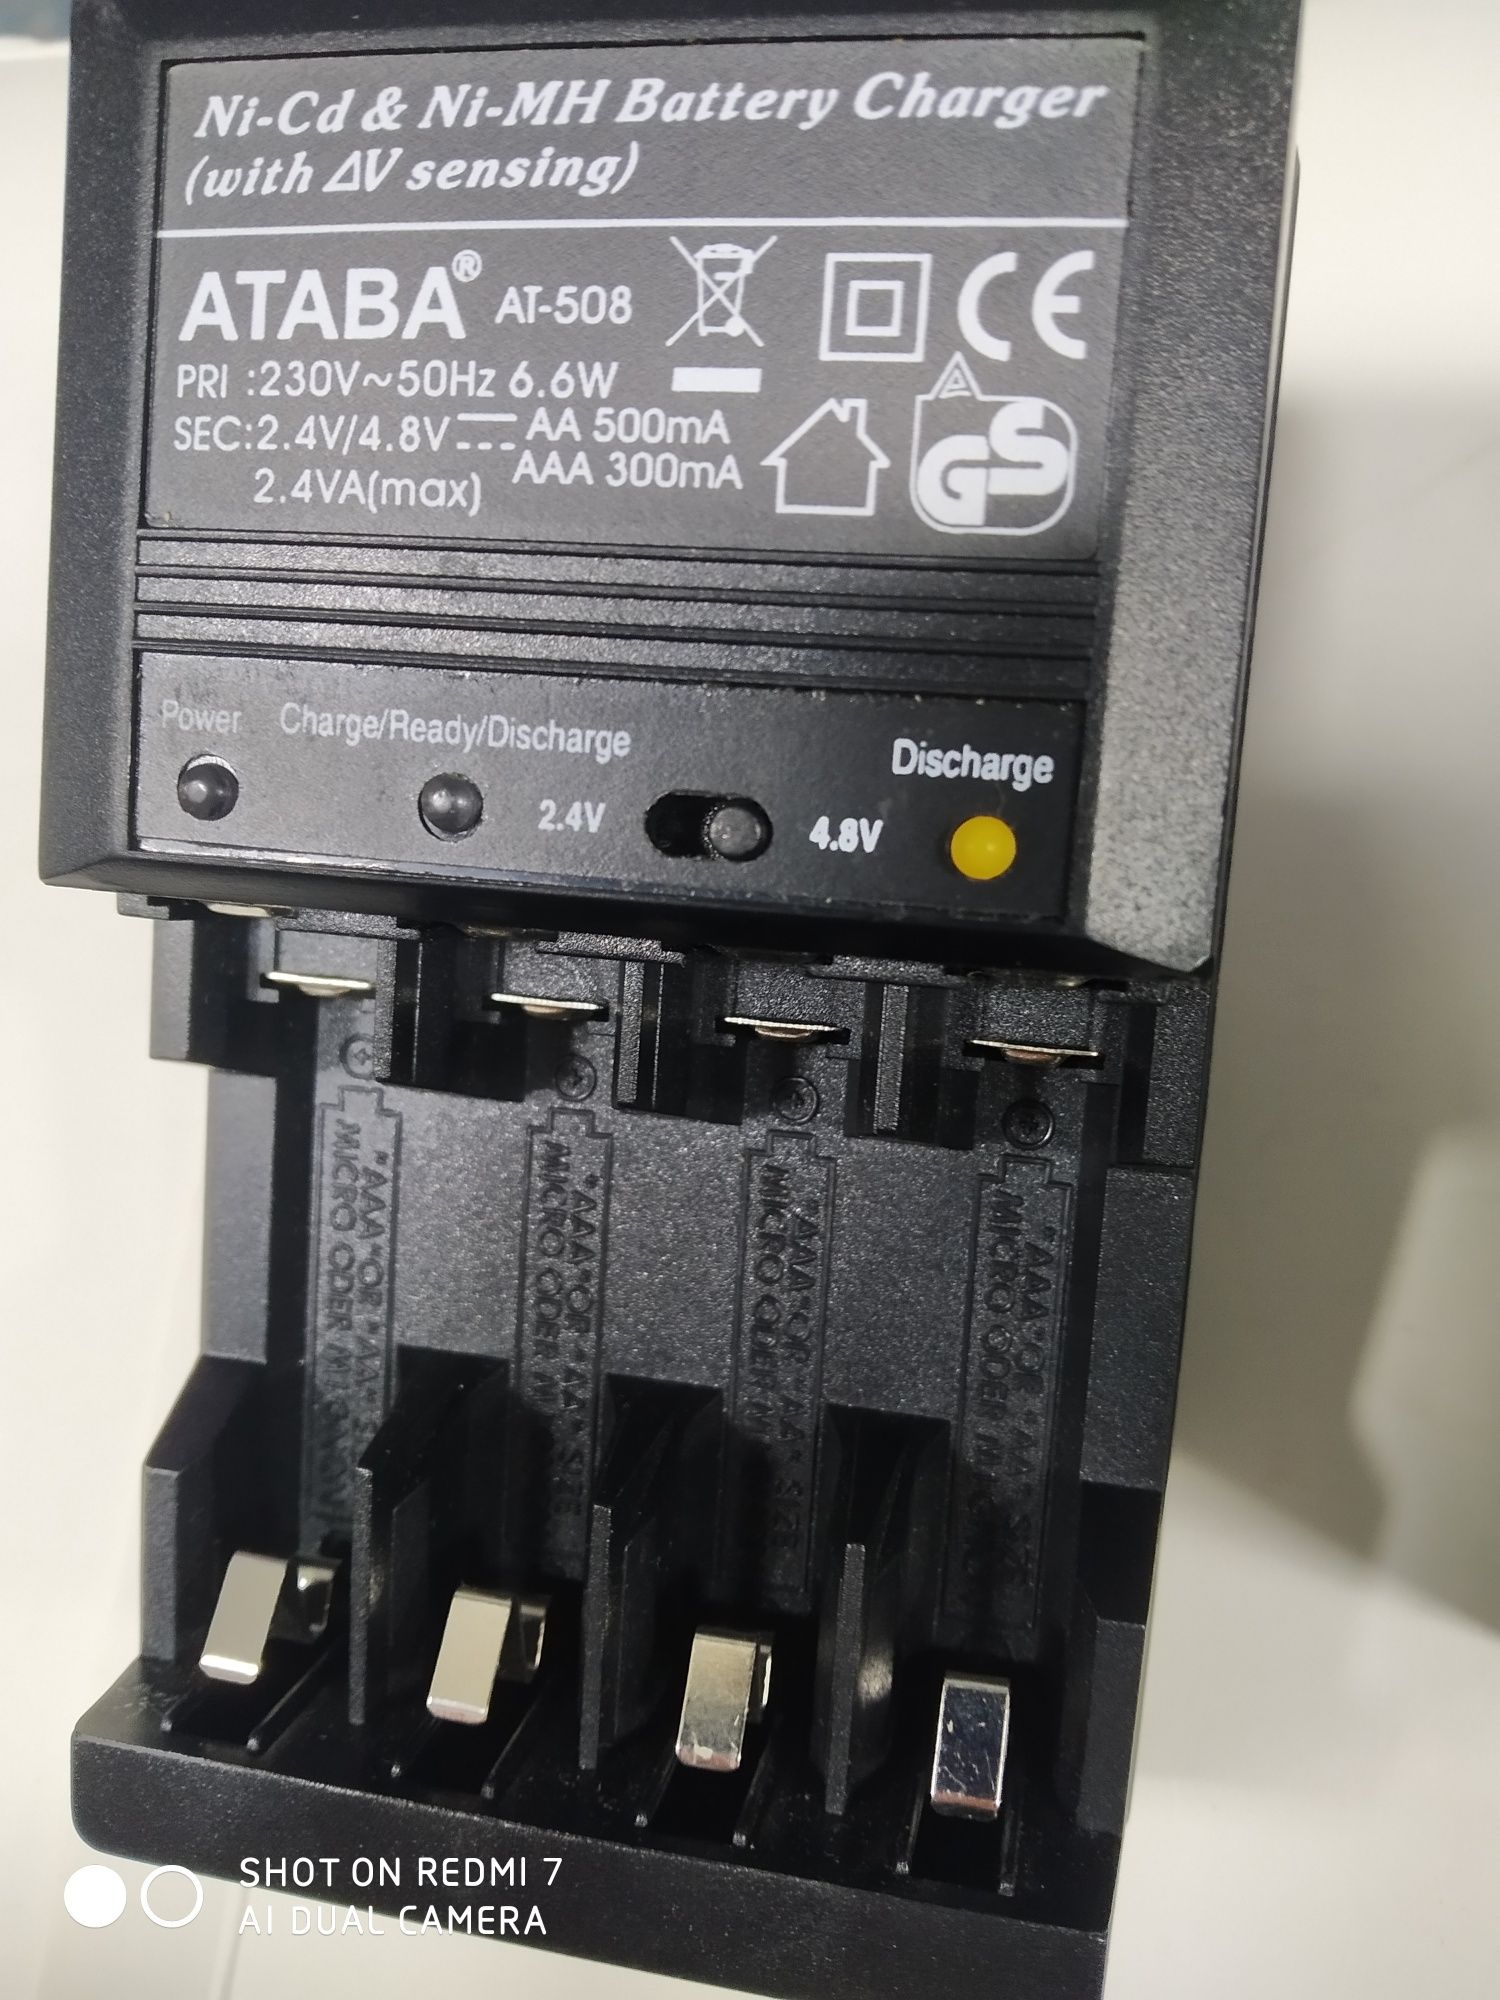 Зарядное устройство Атава АТ-508